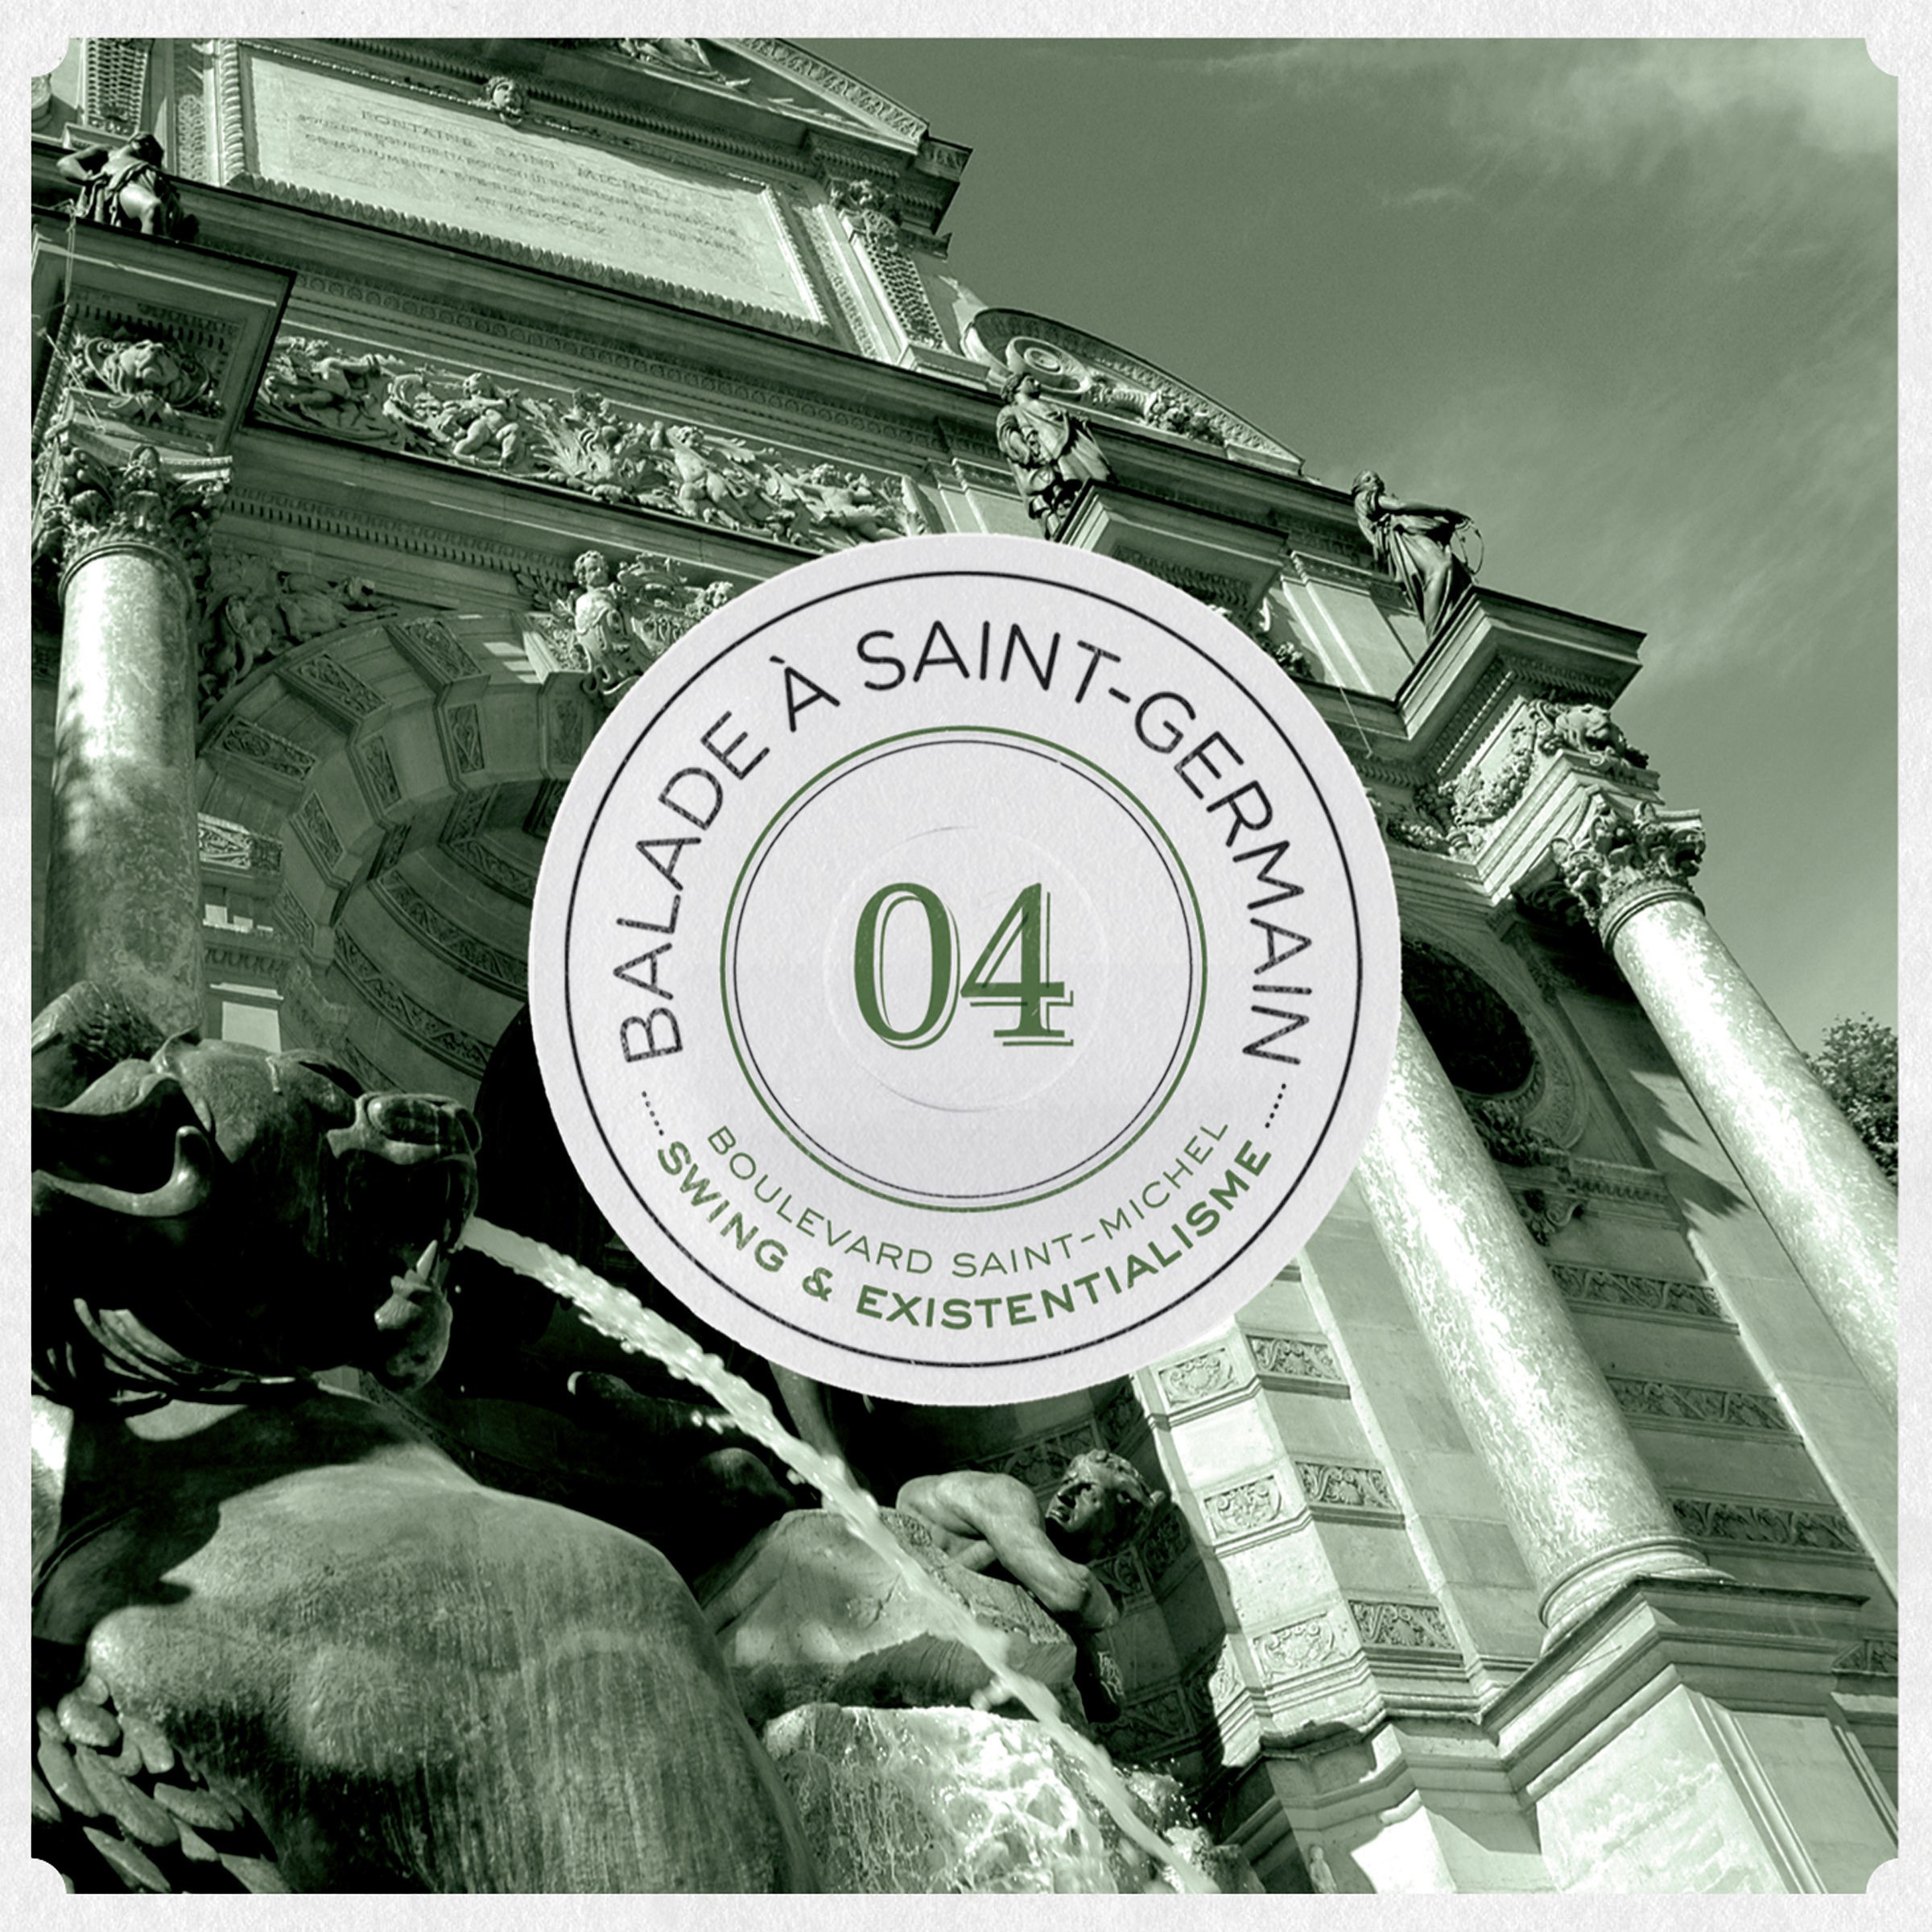 Balade à Saint-Germain, vol 4. Bld Saint-Michel: Swing & Existentialisme